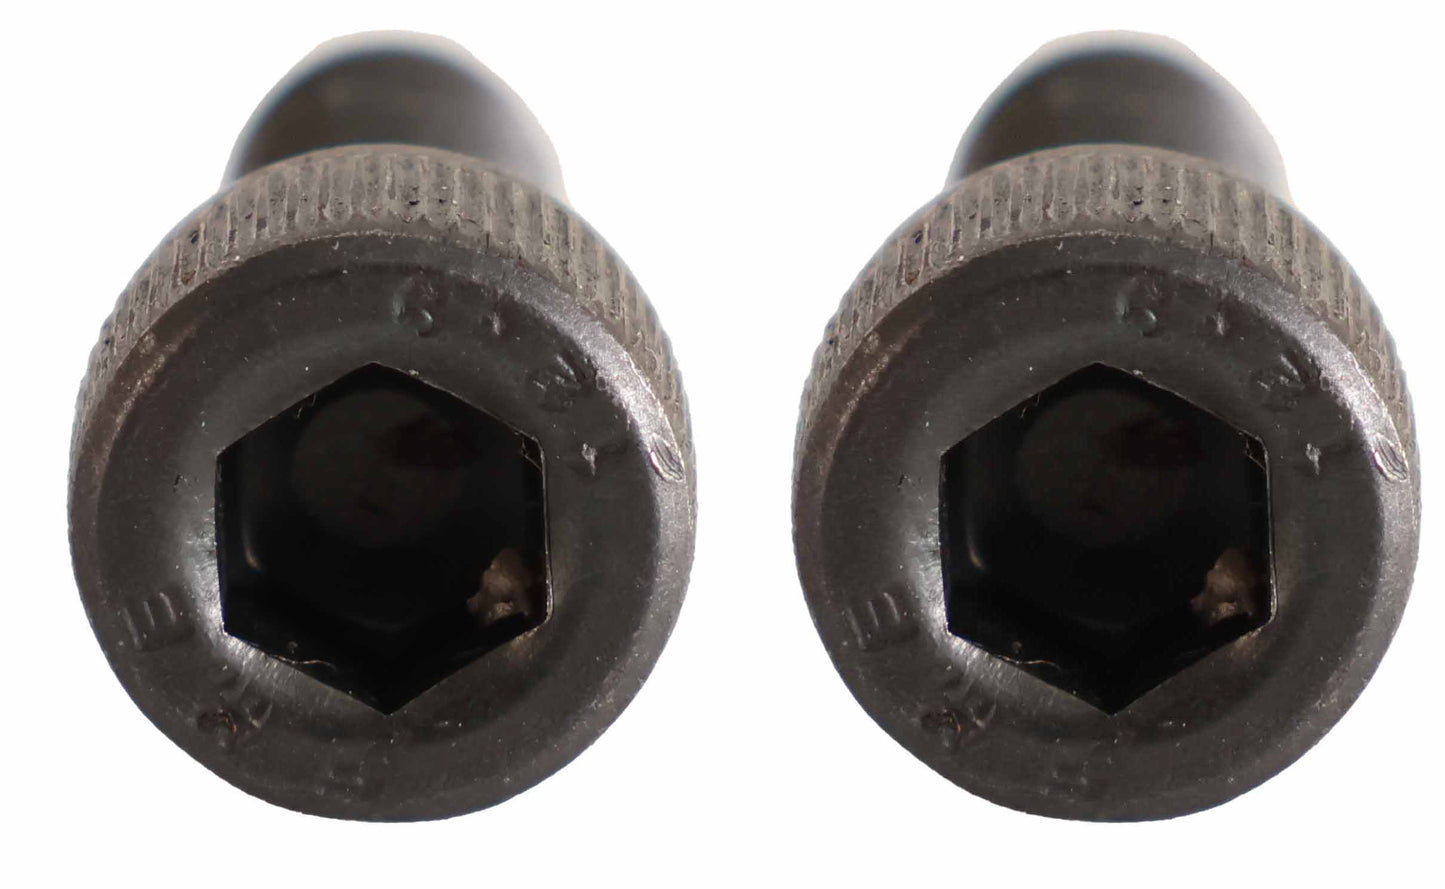 John Deere Original Equipment 19M8553: Cylindrical Head Screw, M6 X 16 (2-PACK) - 19M8553